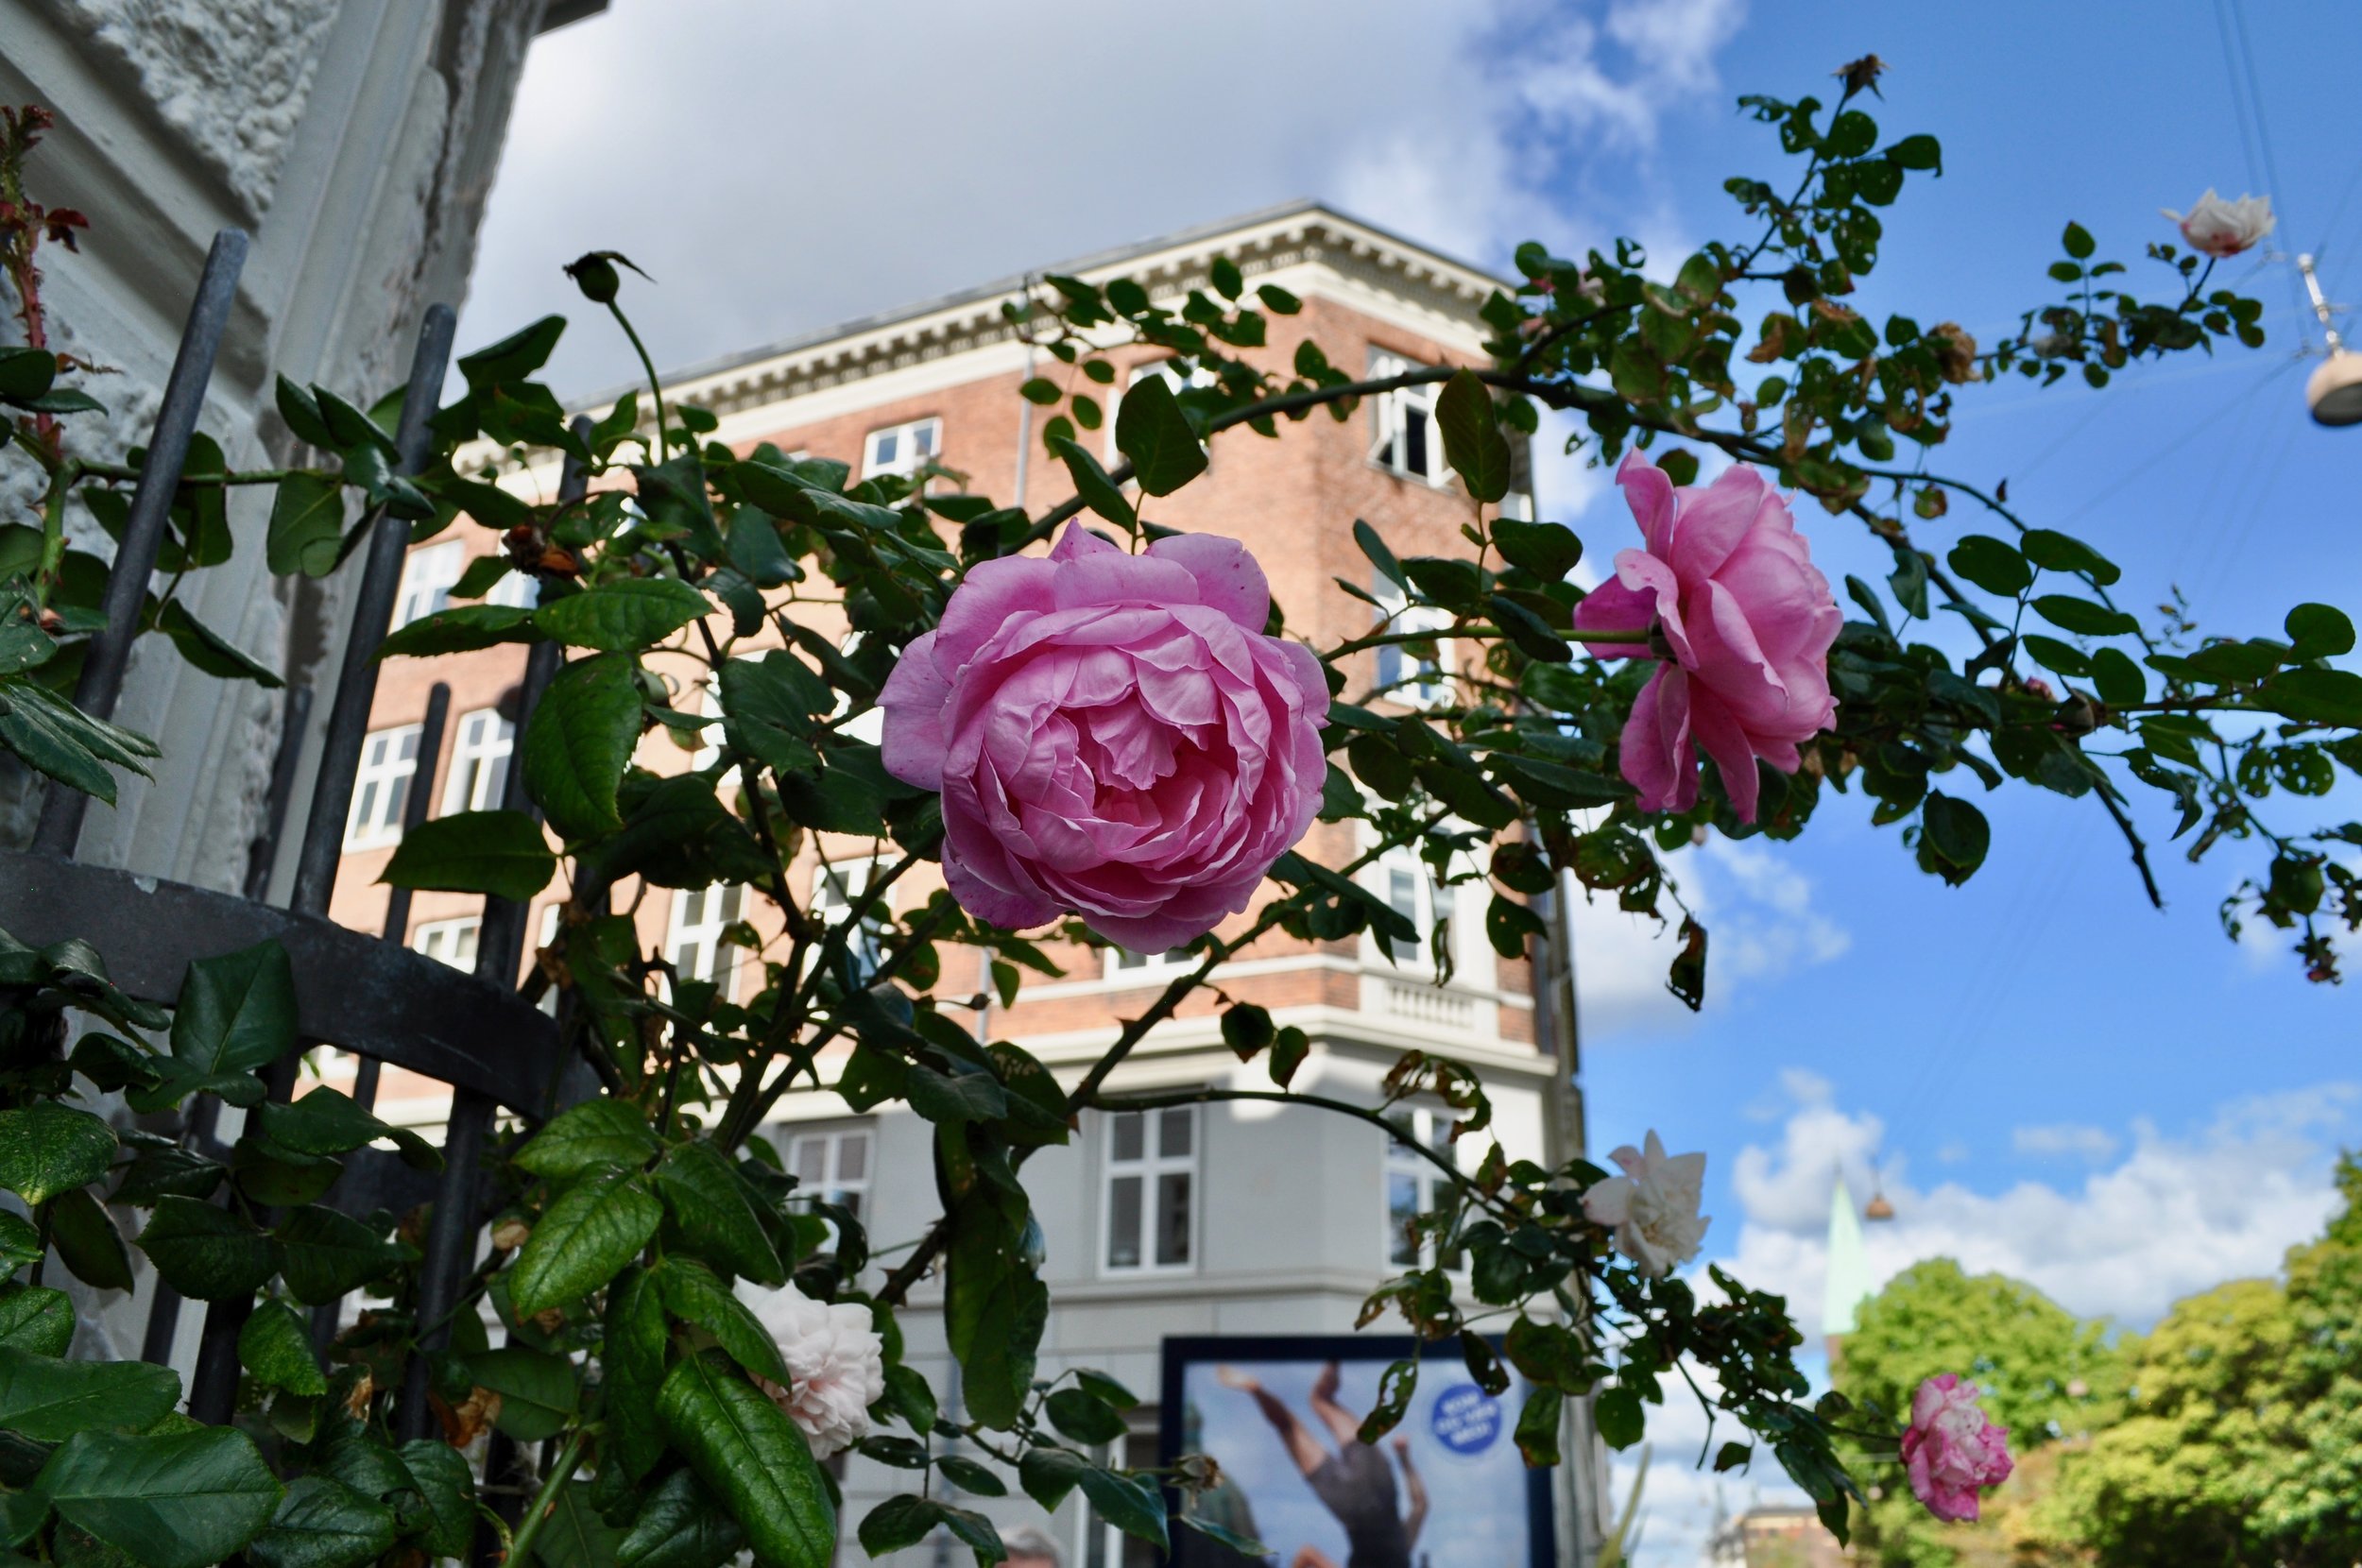 Roses grace the sidewalks